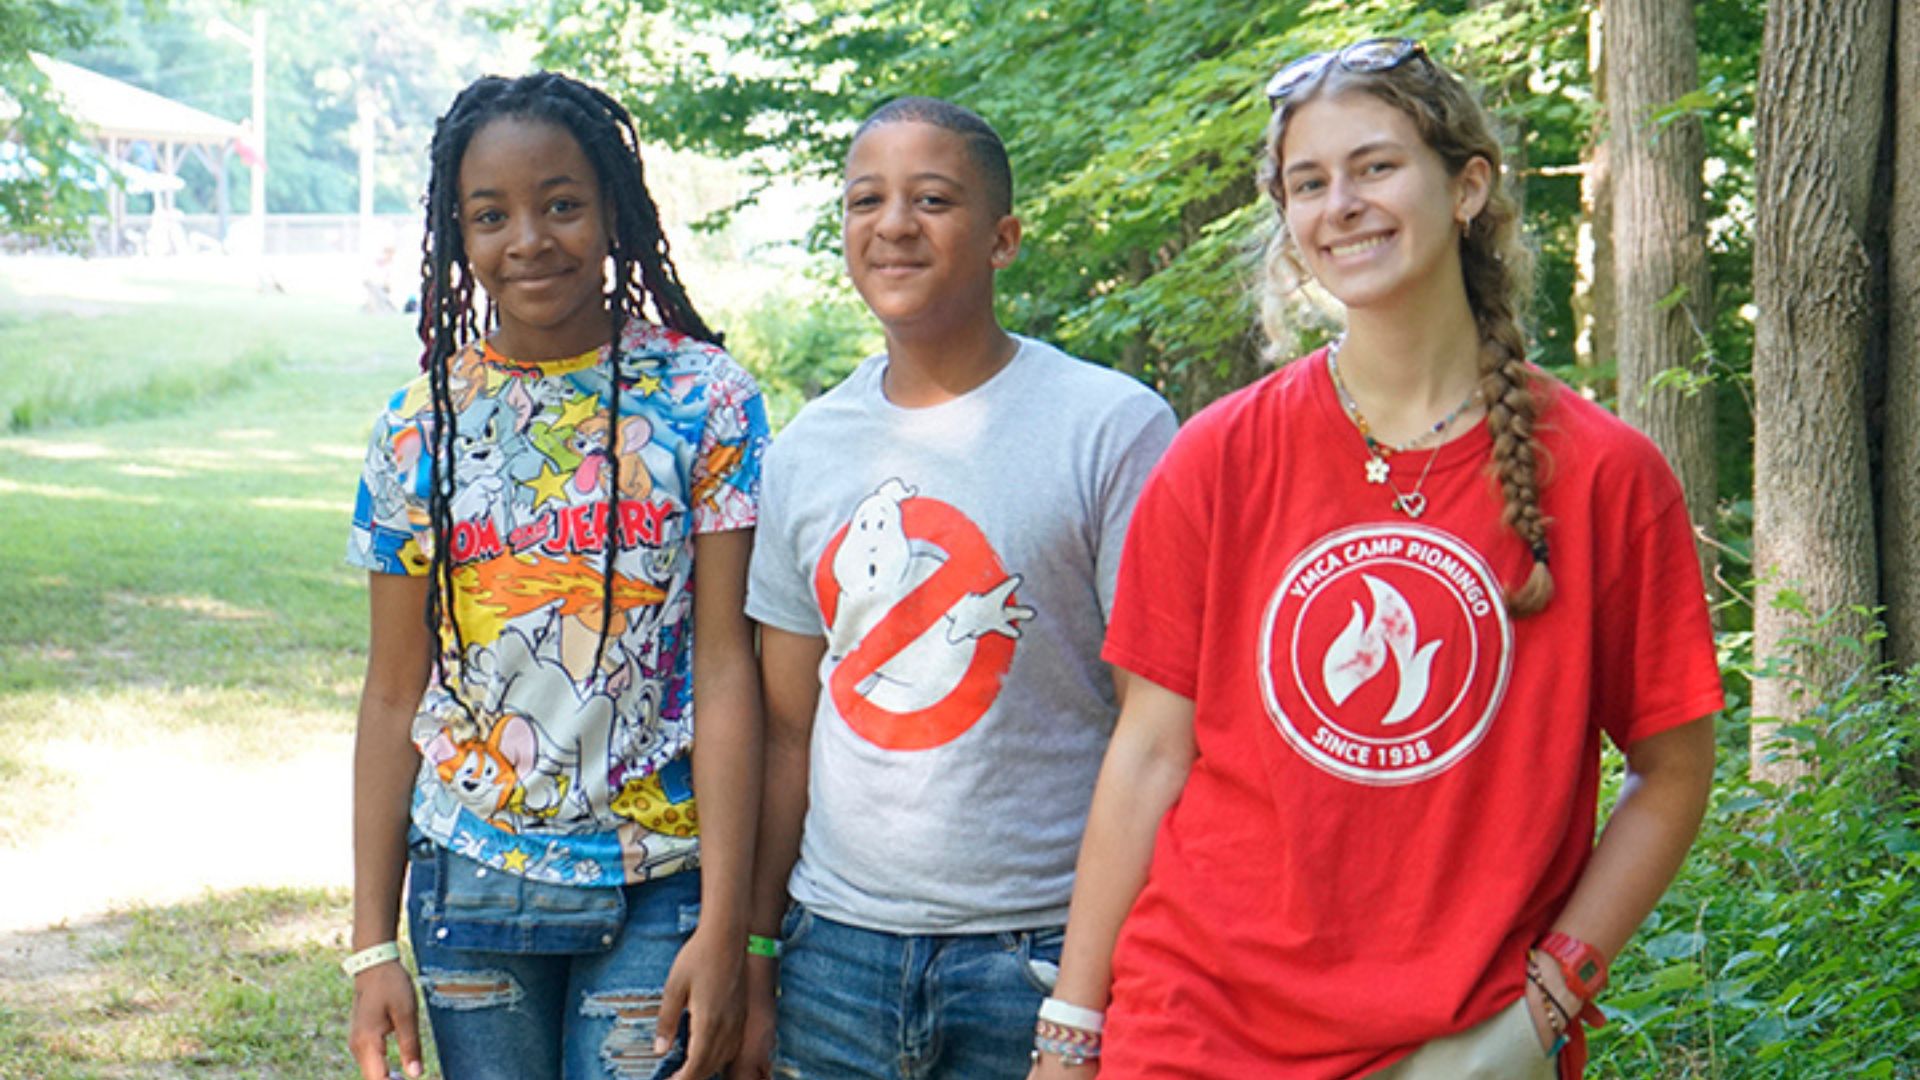 WHAS Up: Summer activities around Louisville for kids, teens